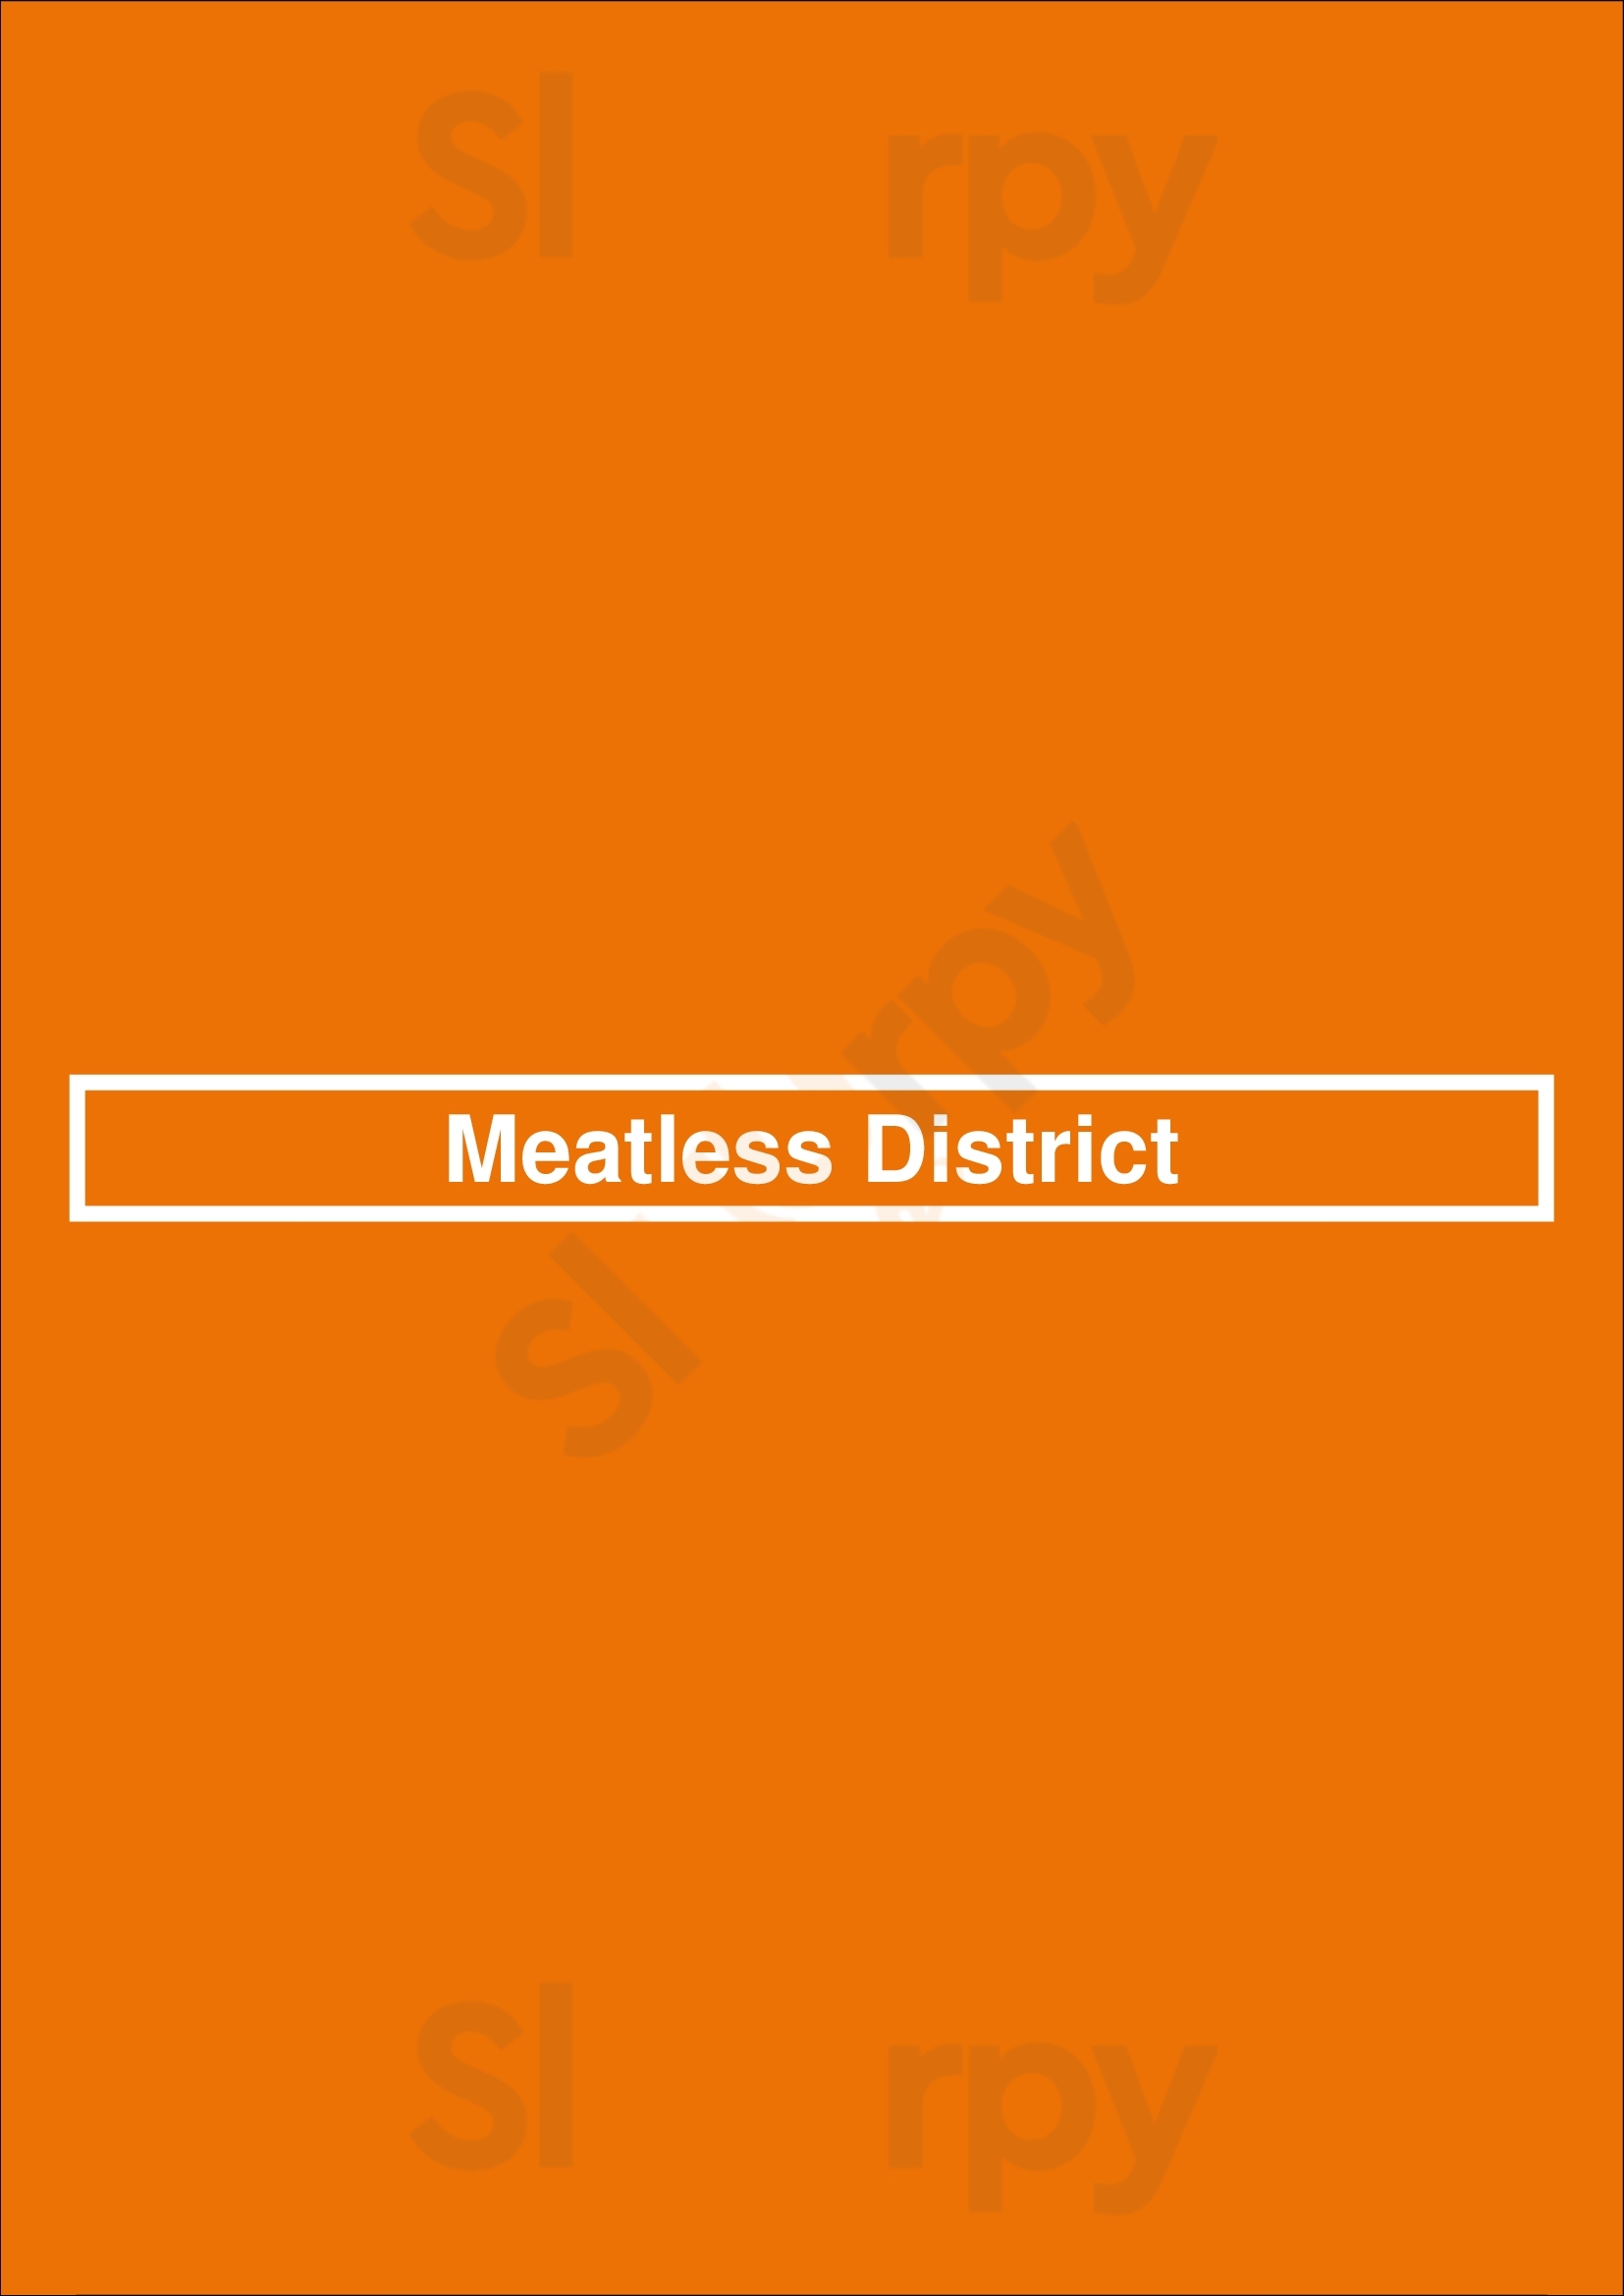 Meatless District Amsterdam Menu - 1